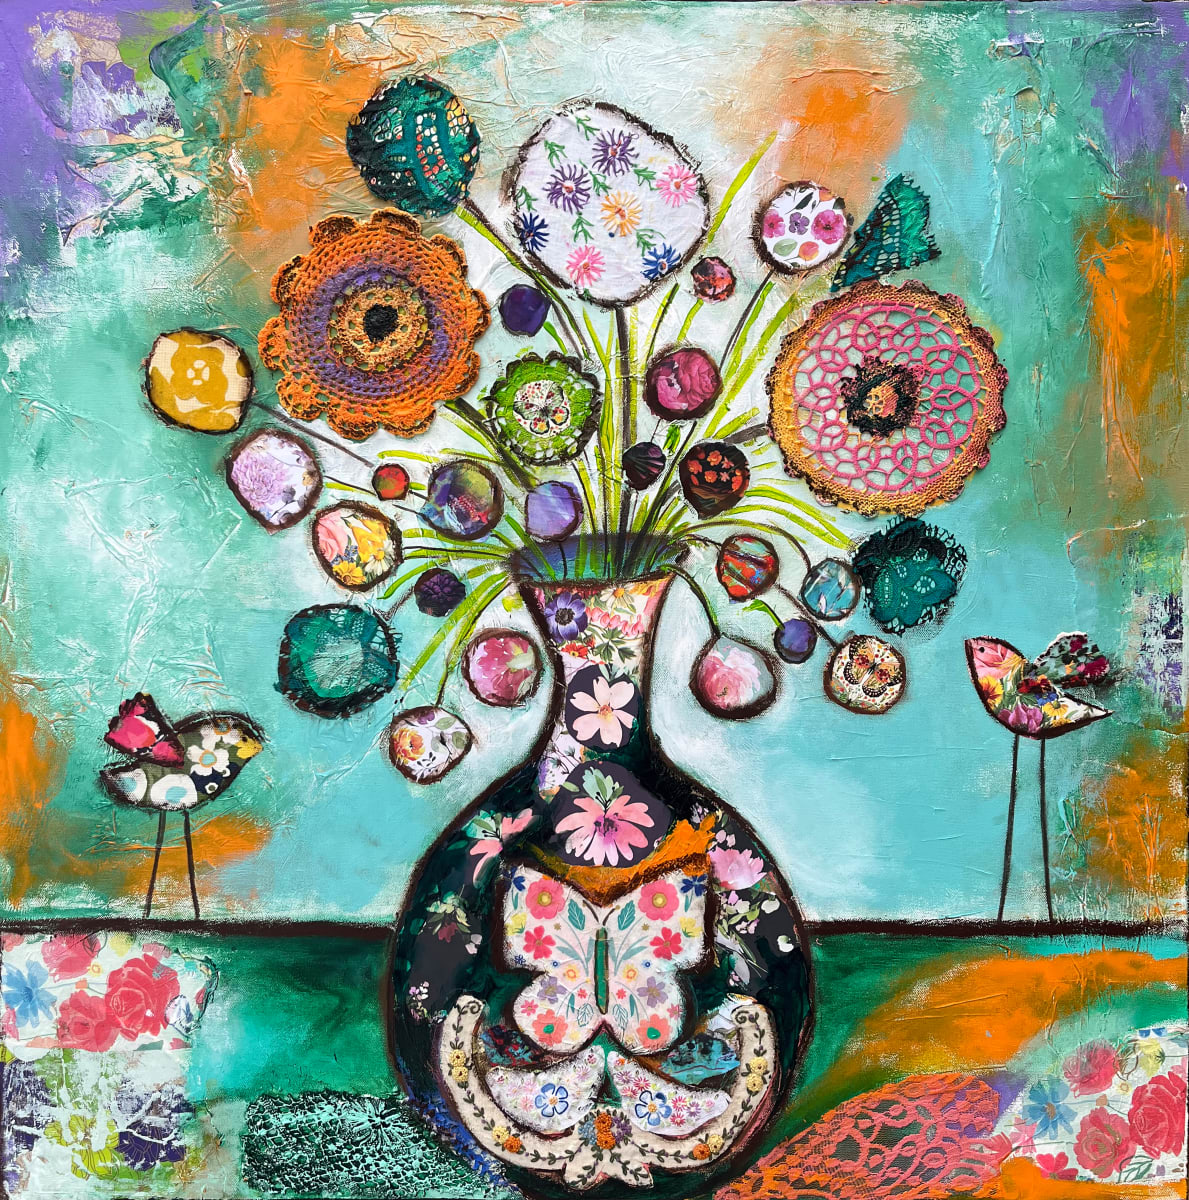 Joyful Bouquet by Kandy Myny 